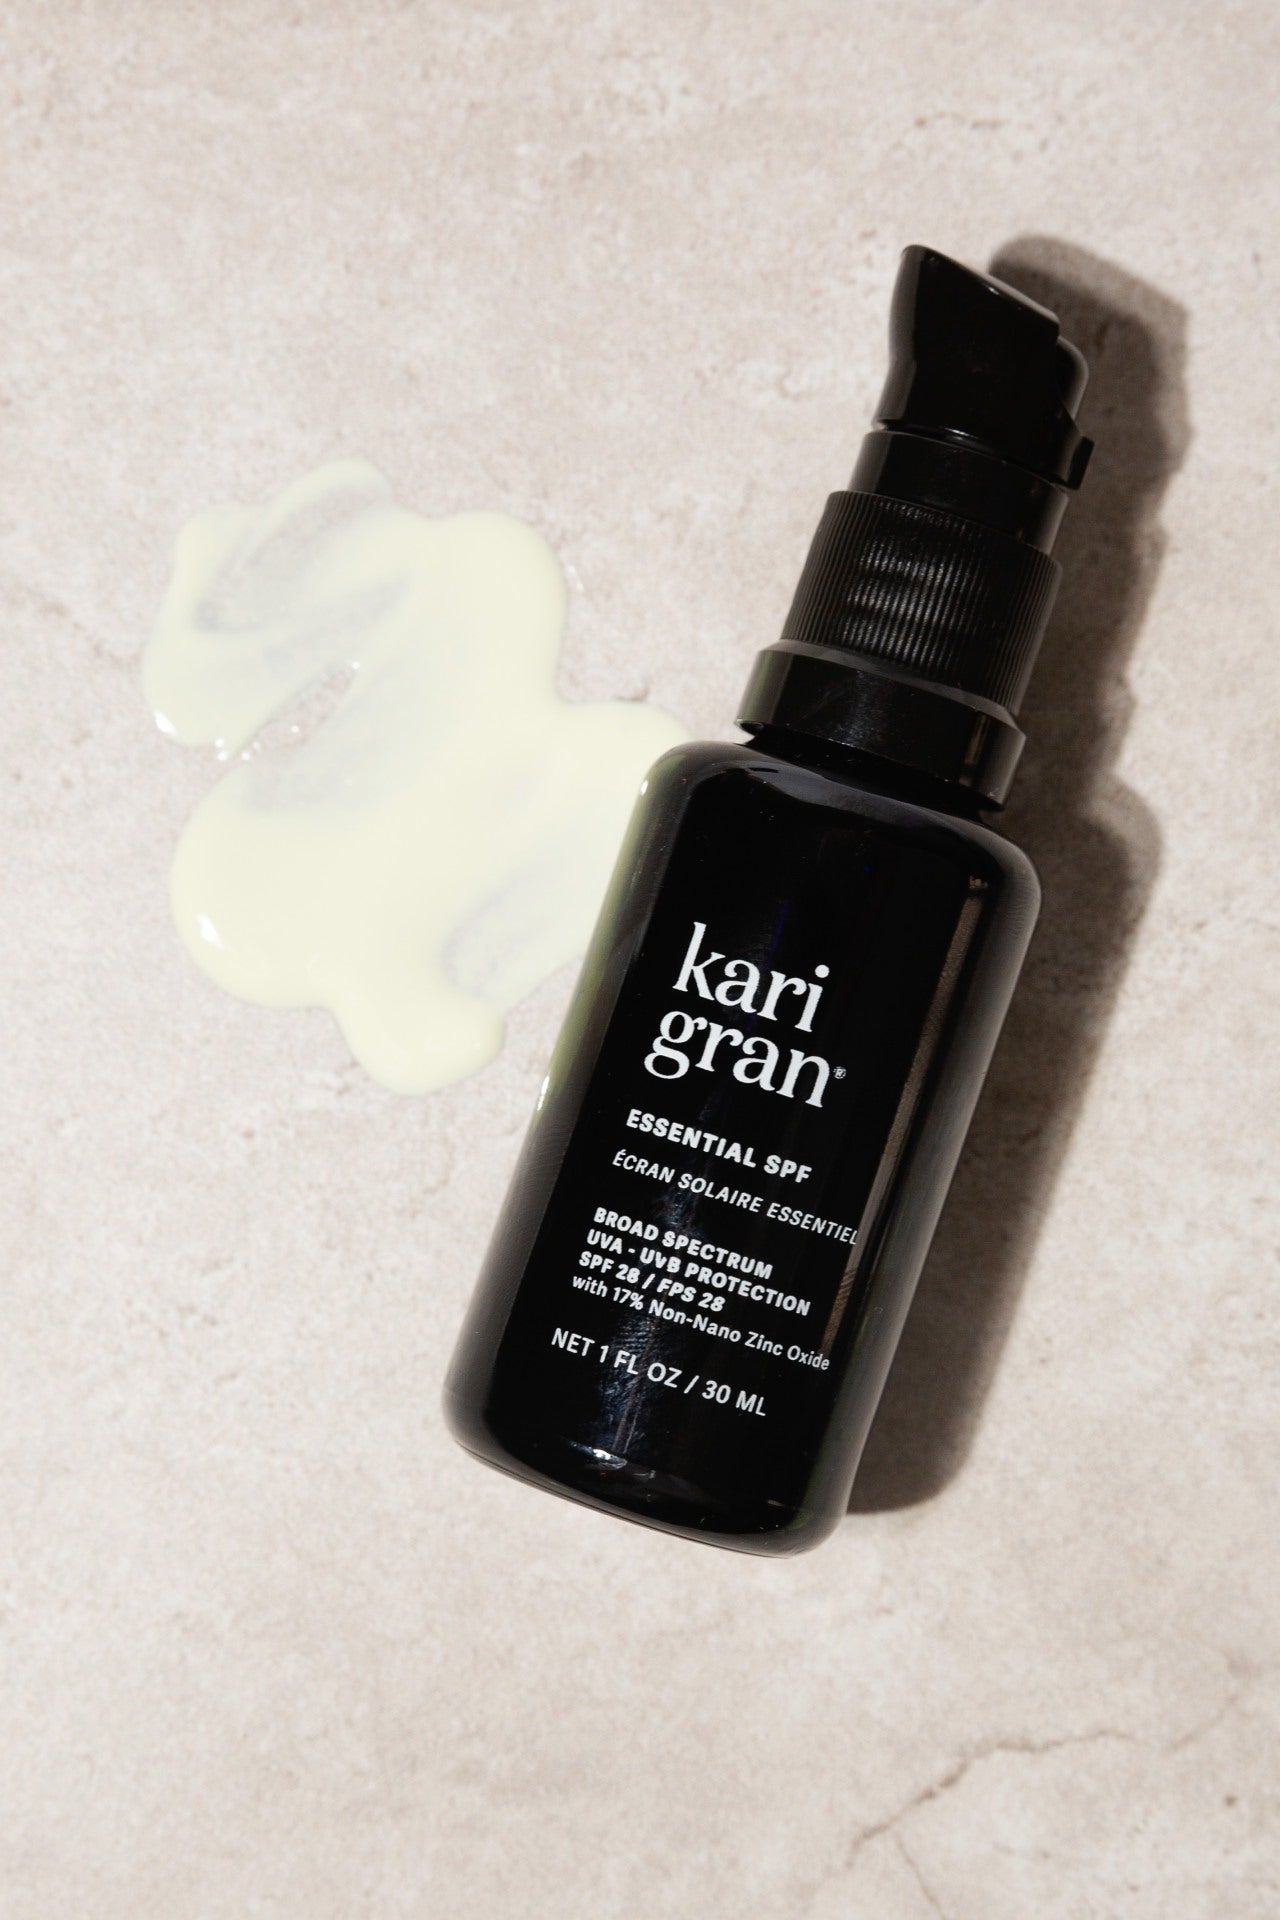 Essential  SPF Mineral Facial Sunscreen by Kari Gran